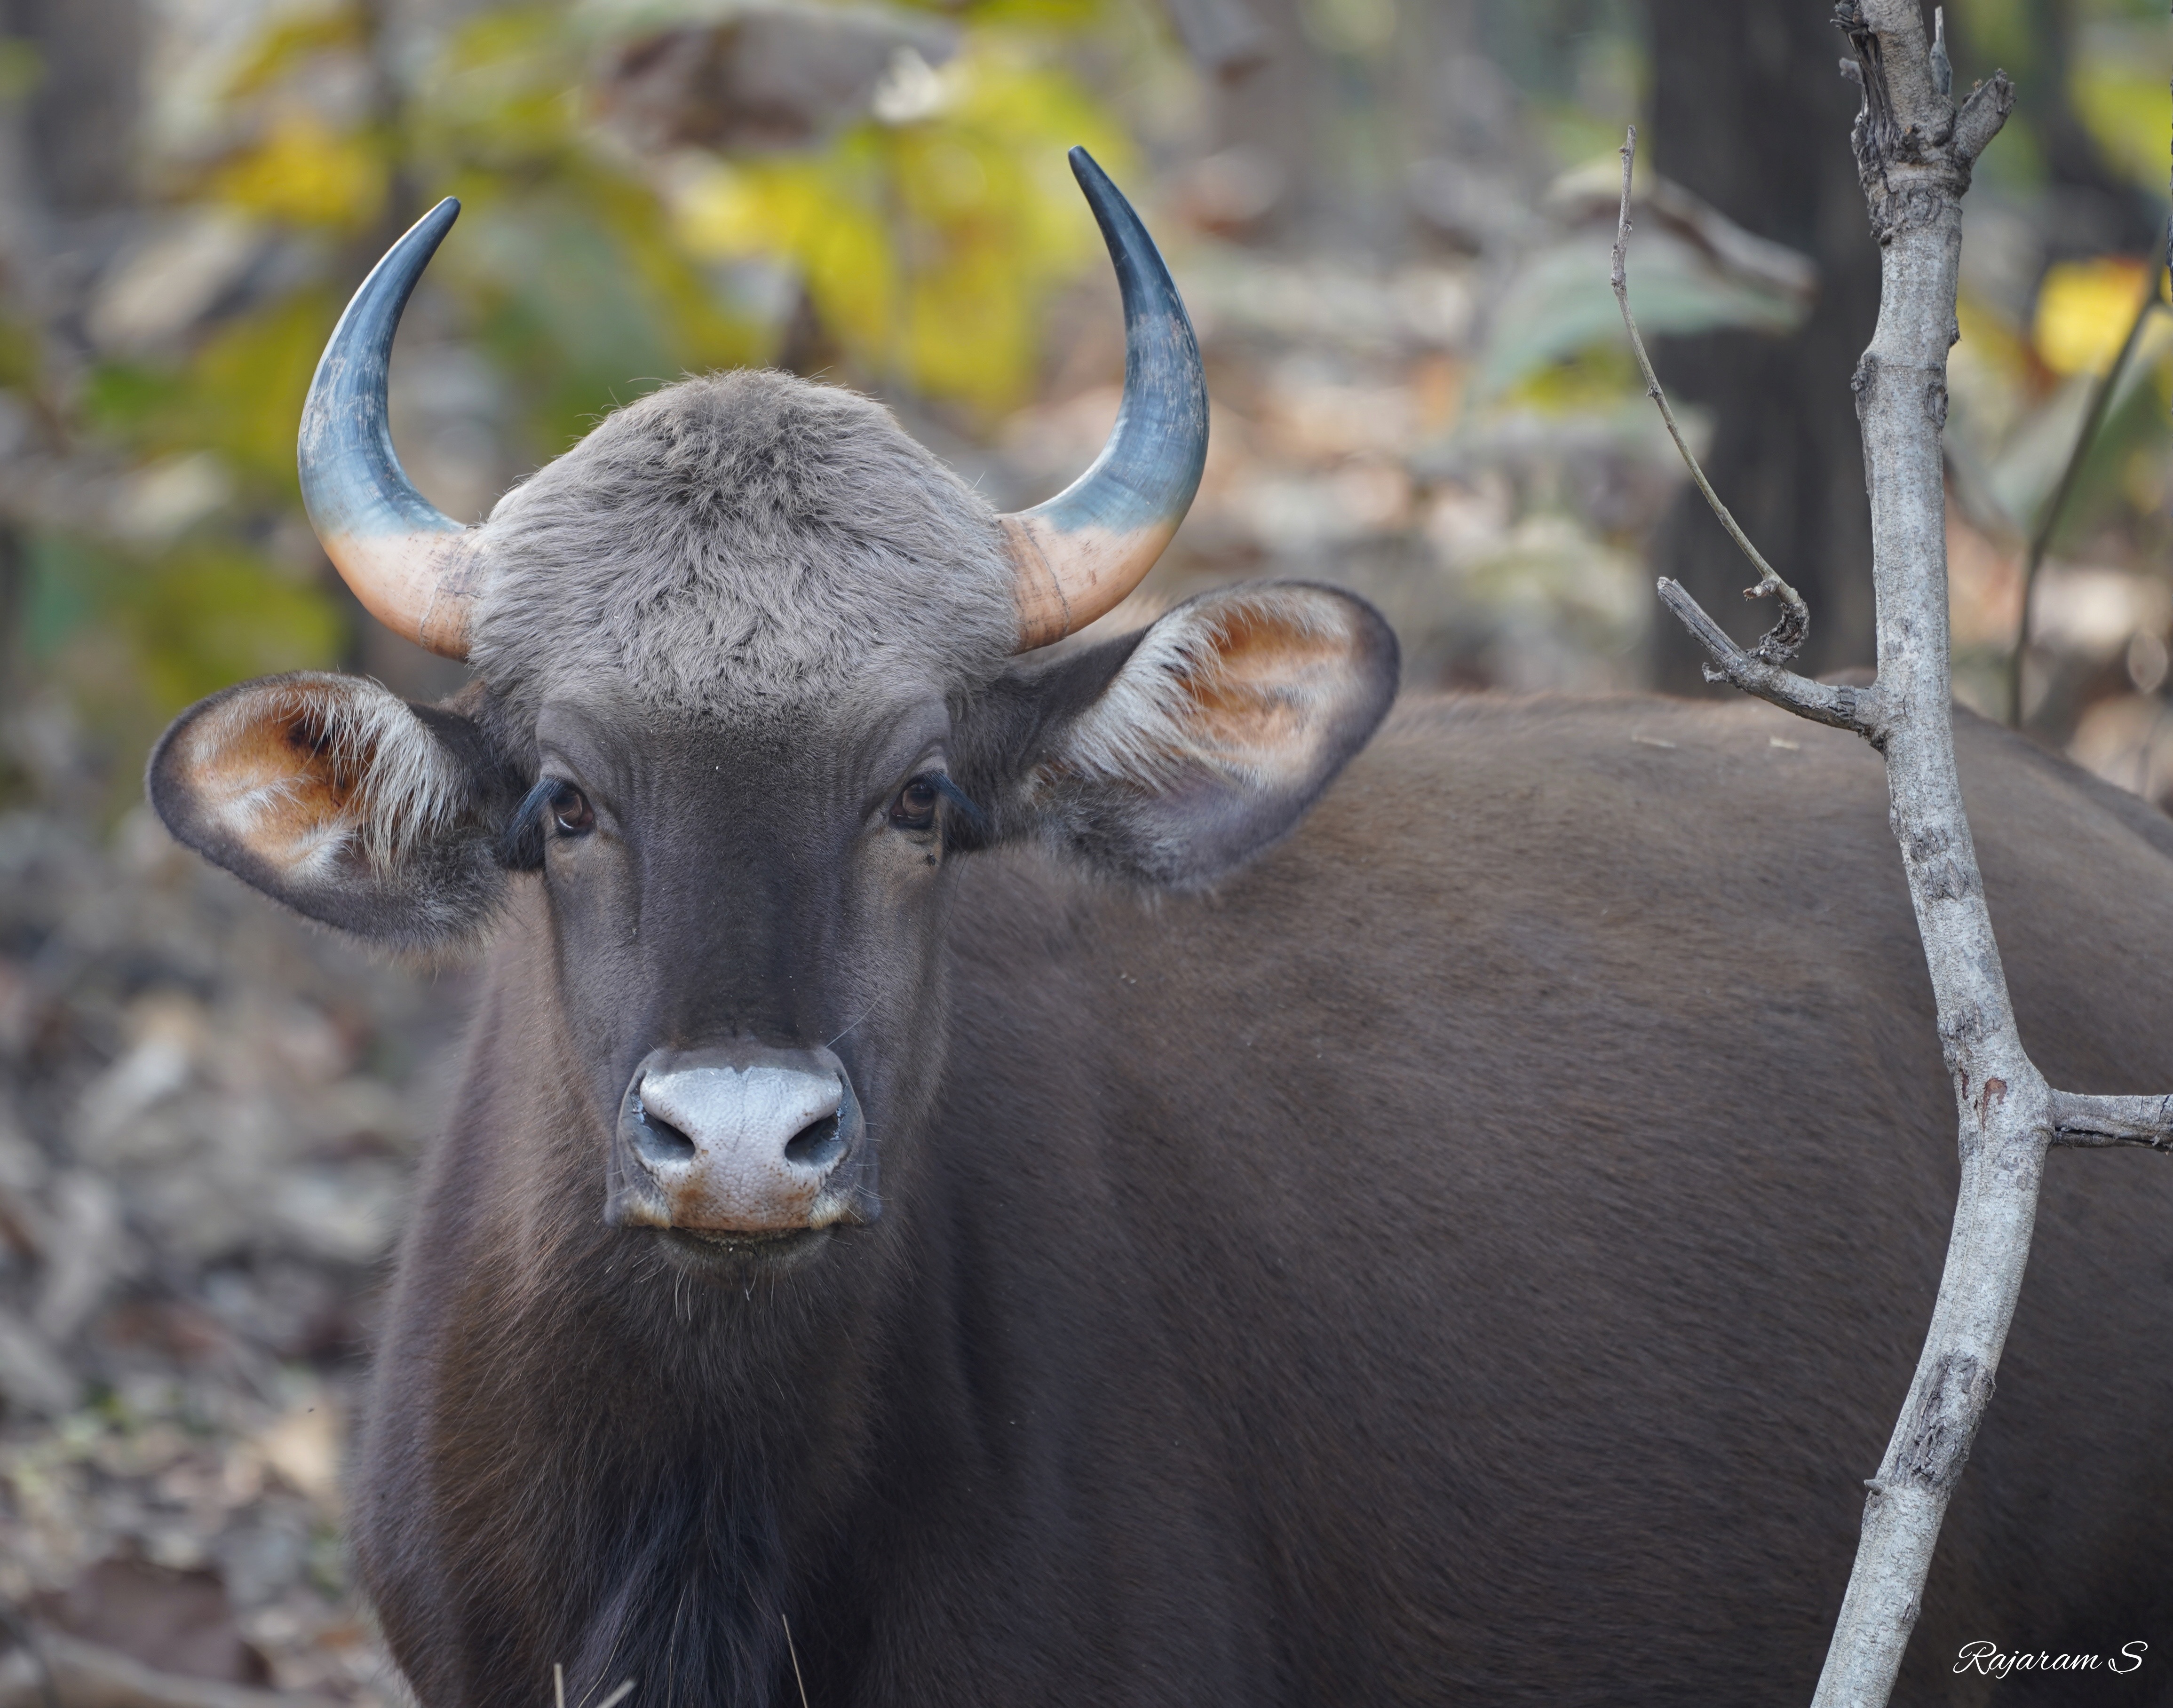 A gaur watches intently